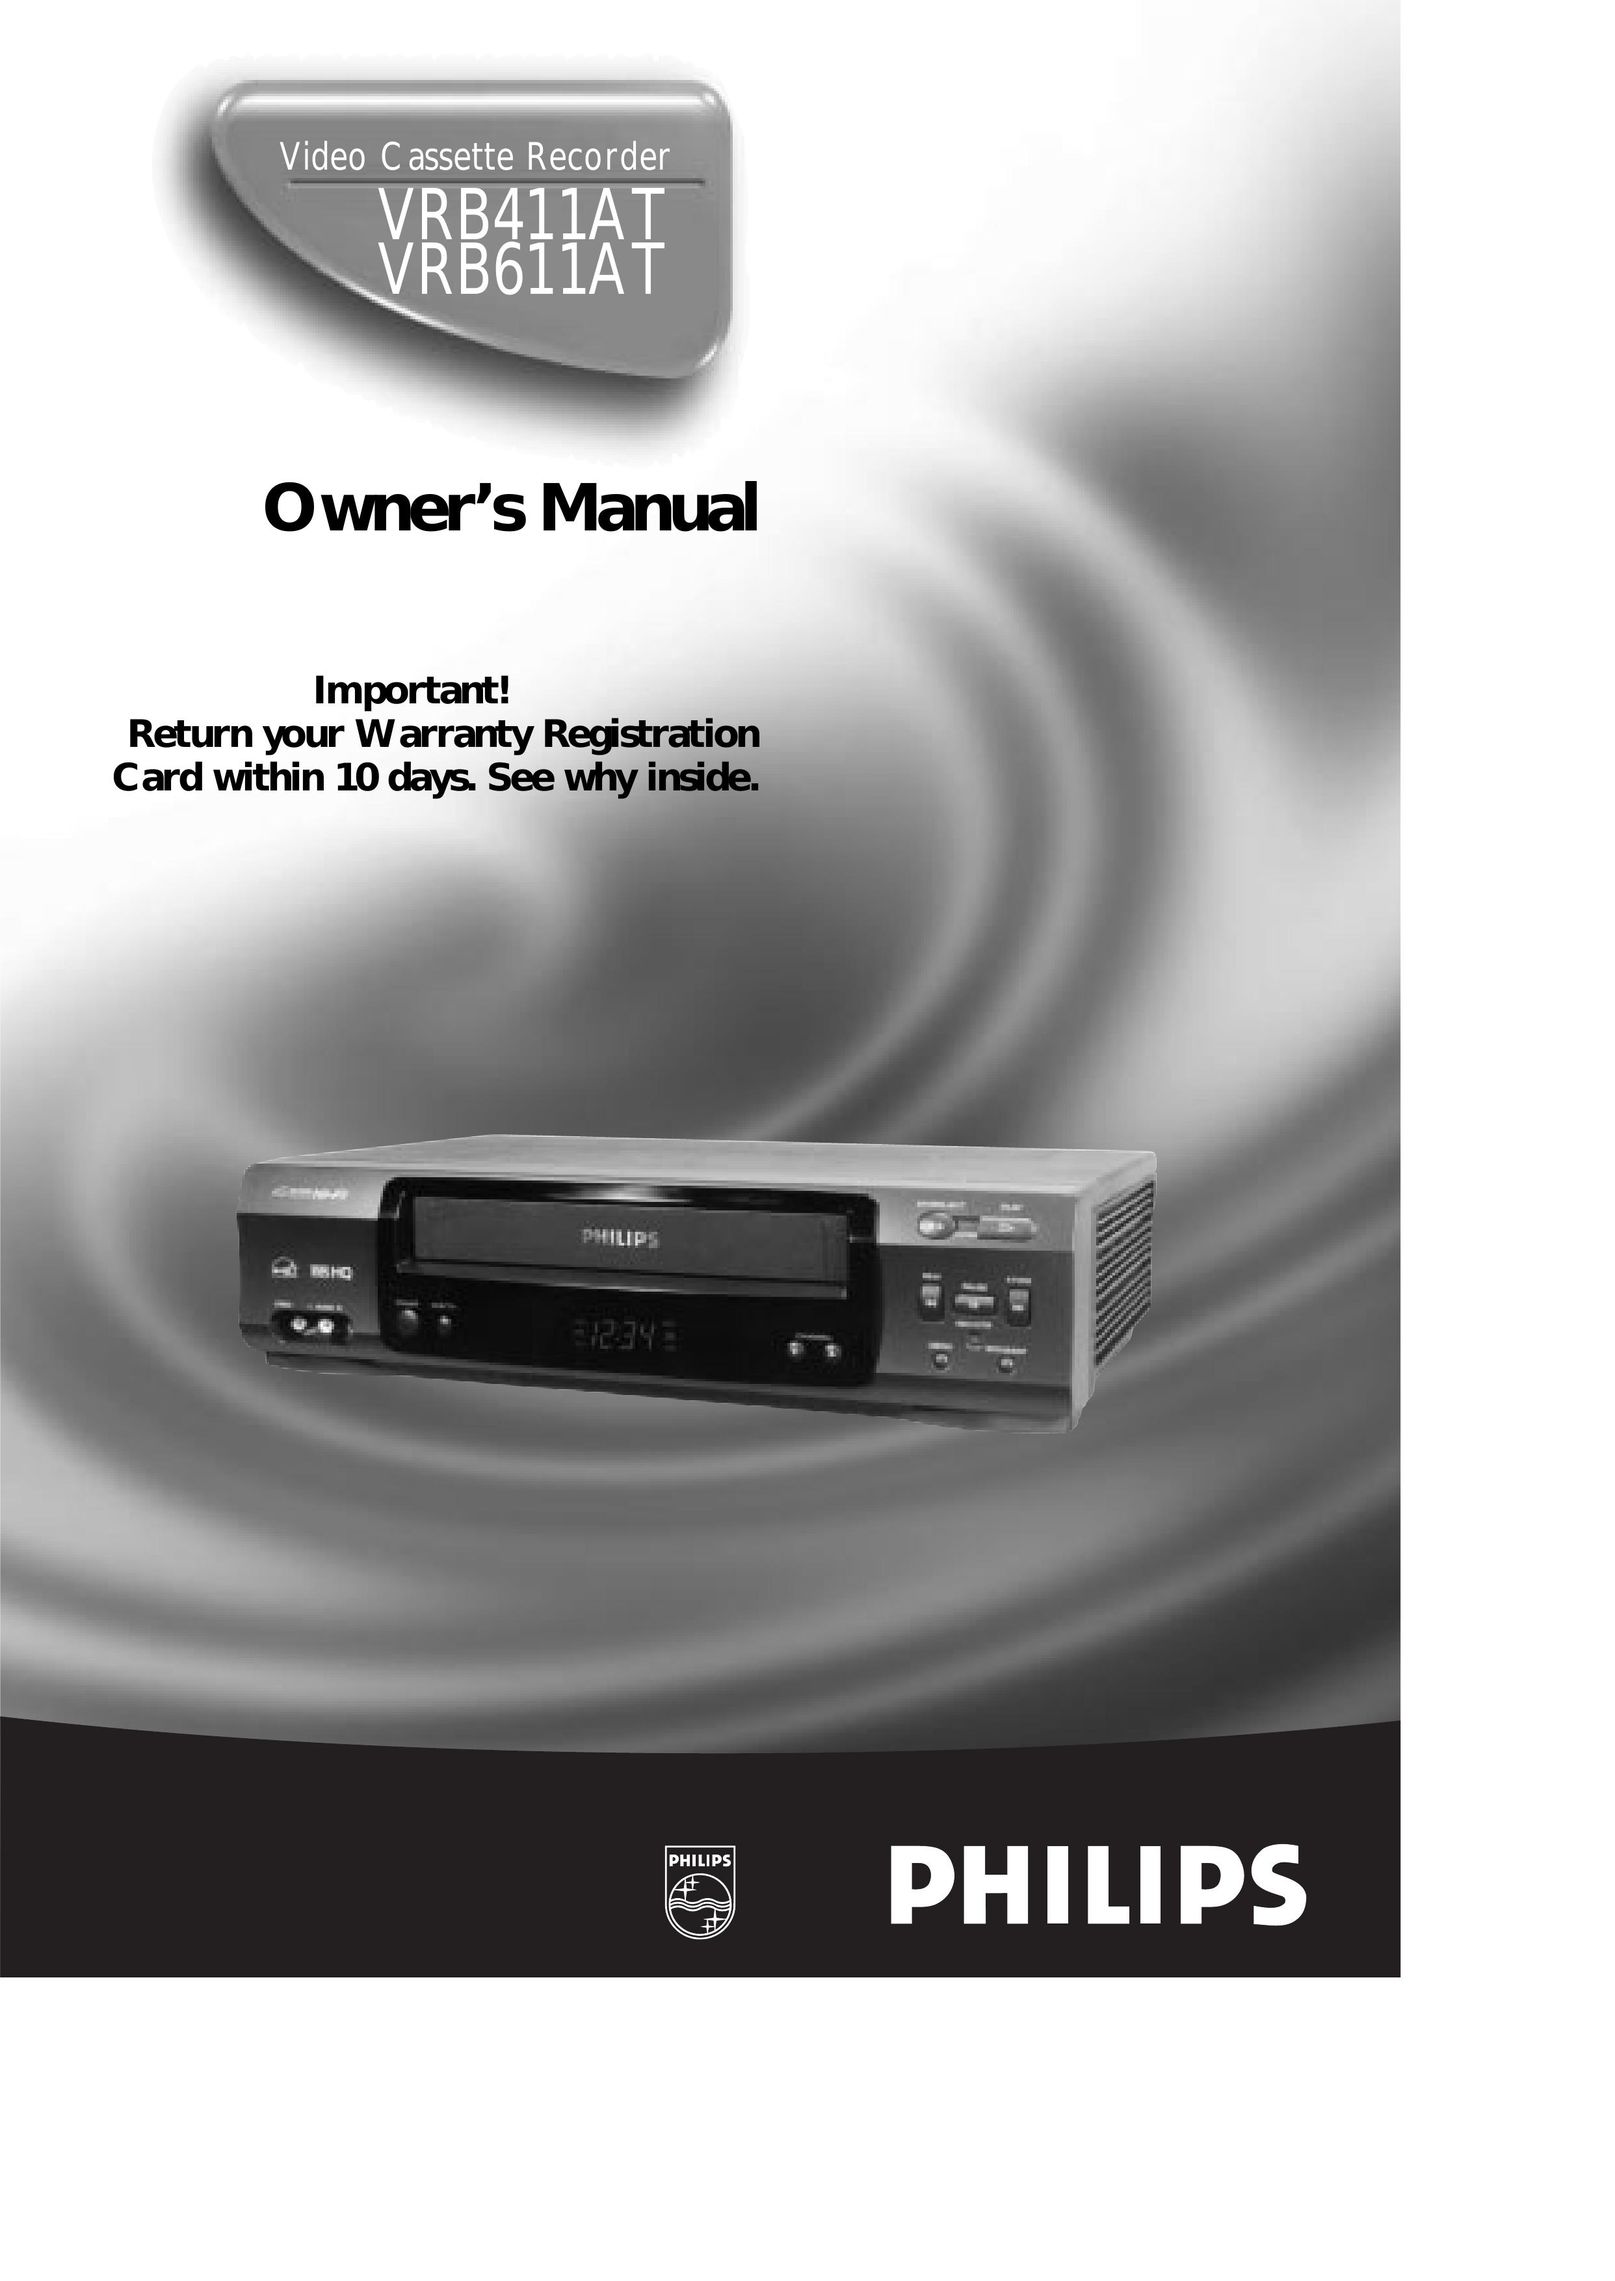 Magnavox VRB611AT VCR User Manual